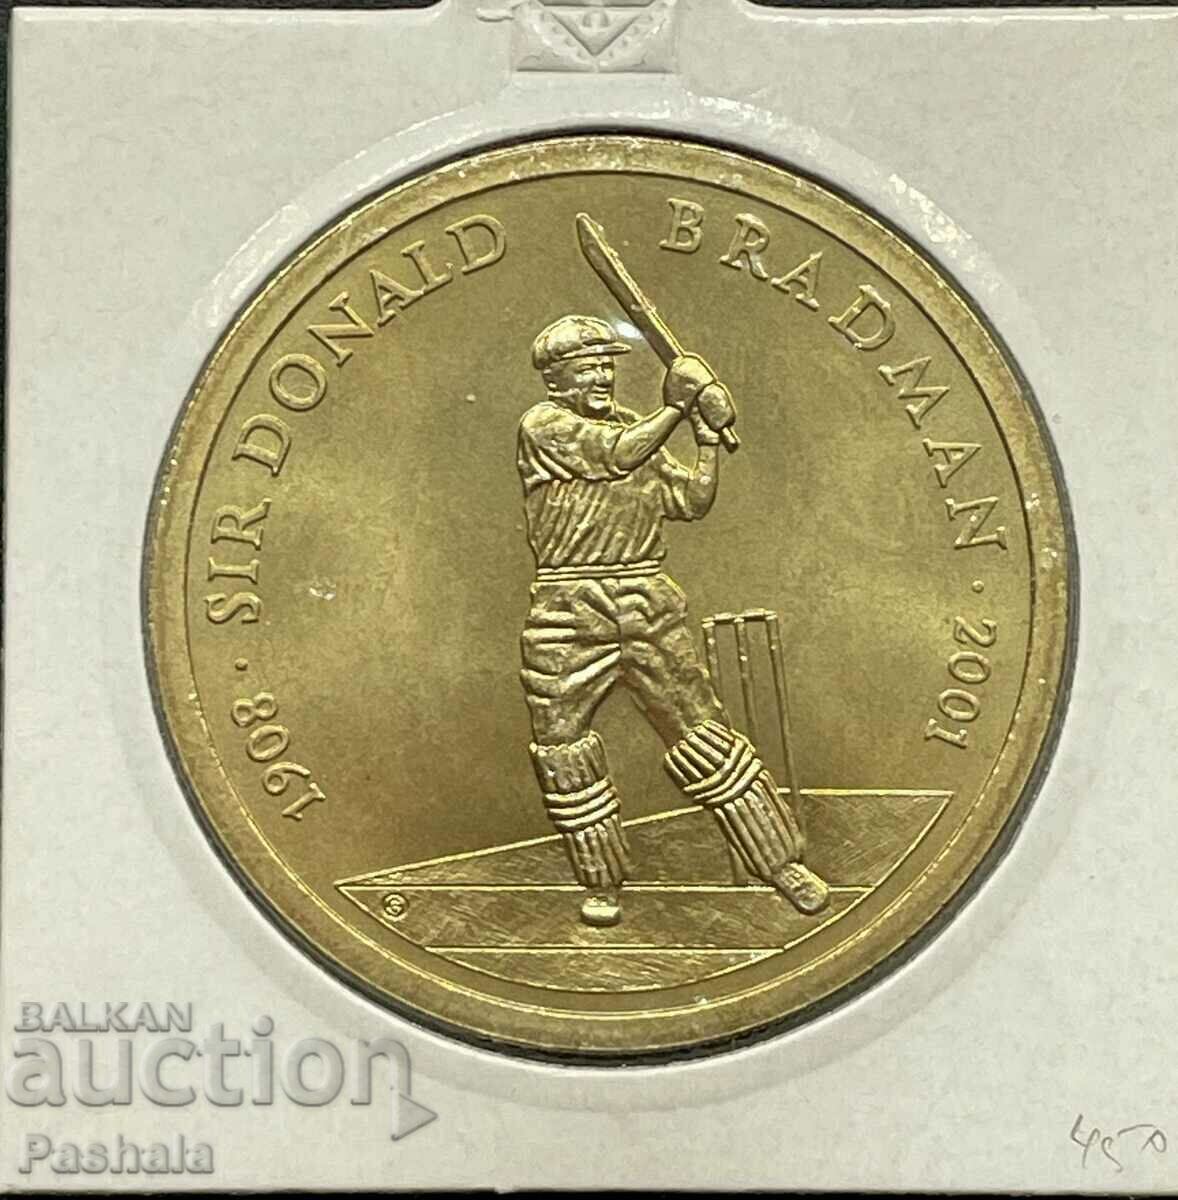 Australia 5 USD 2001